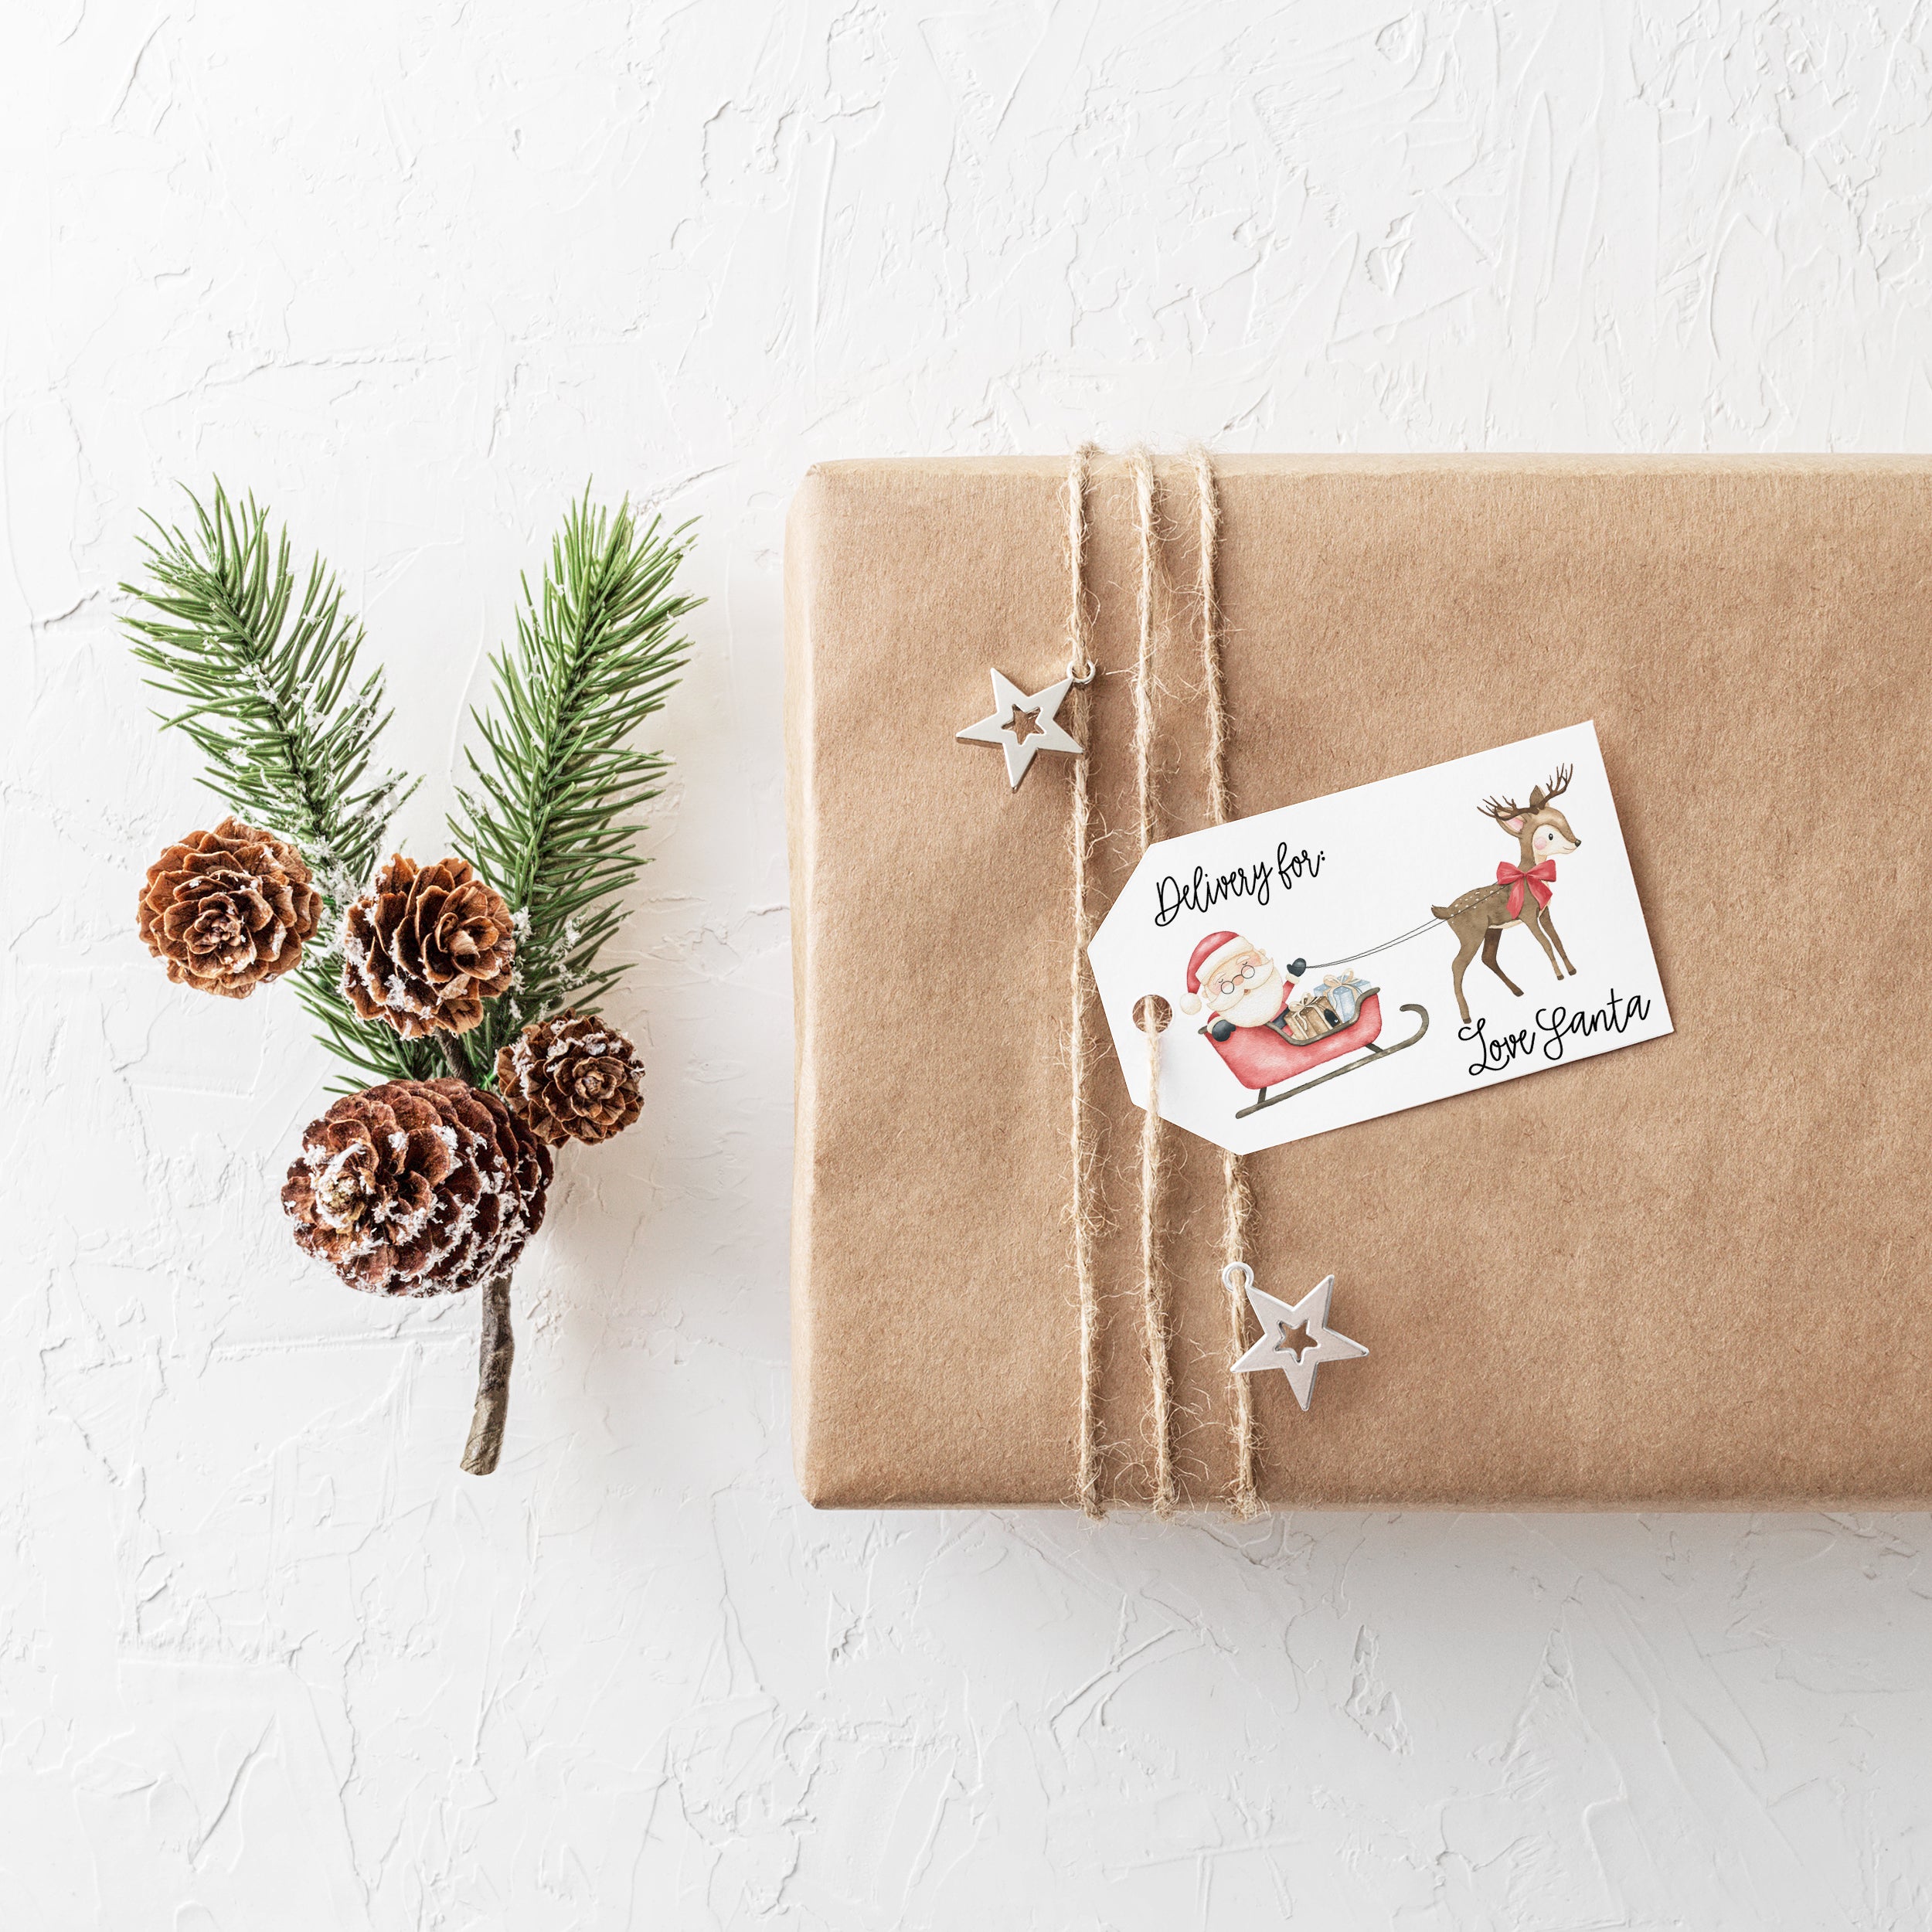 Deliver for Santa Gift Tags  - Creativien